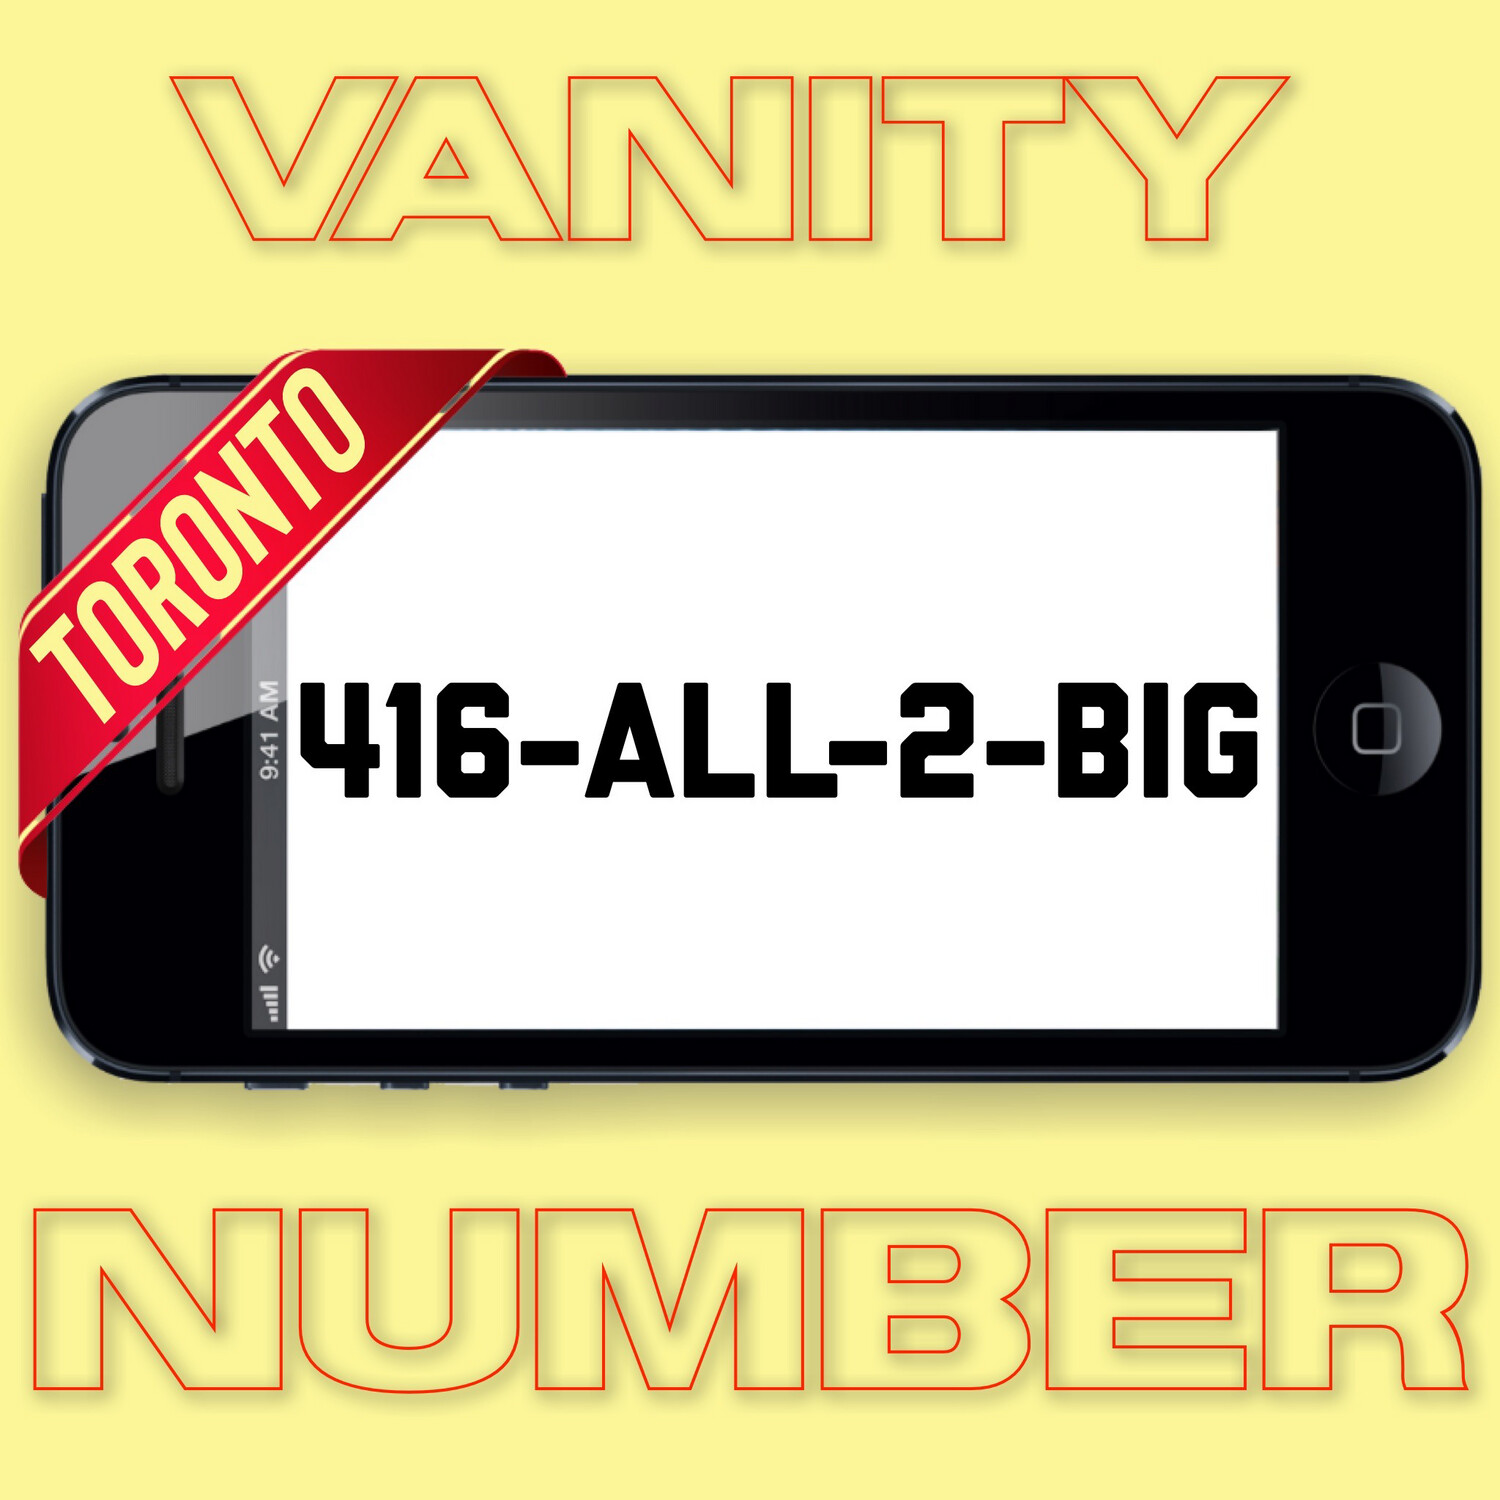 416-255-2244 (ALL TO BIG) VANITY NUMBER TORONTO